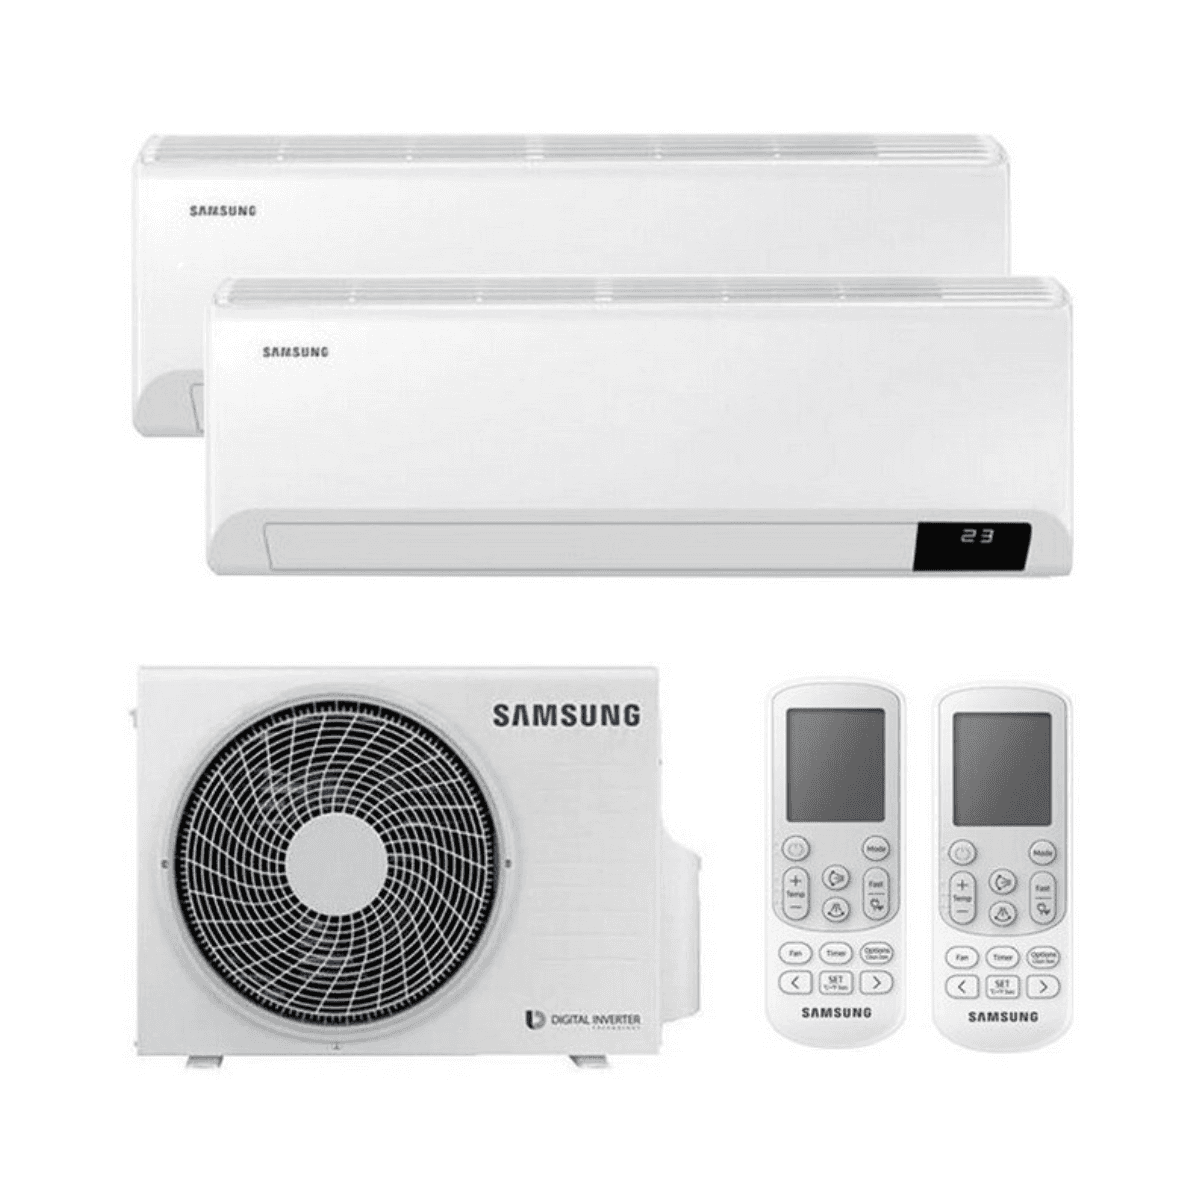 Condizionatore dual split Samsung Wind Free Comfort AR09 + AR12 9000 BTU + 12000 BTU con riferimento KITSAMWINDFREE09+18 del marchio SAMSUNG